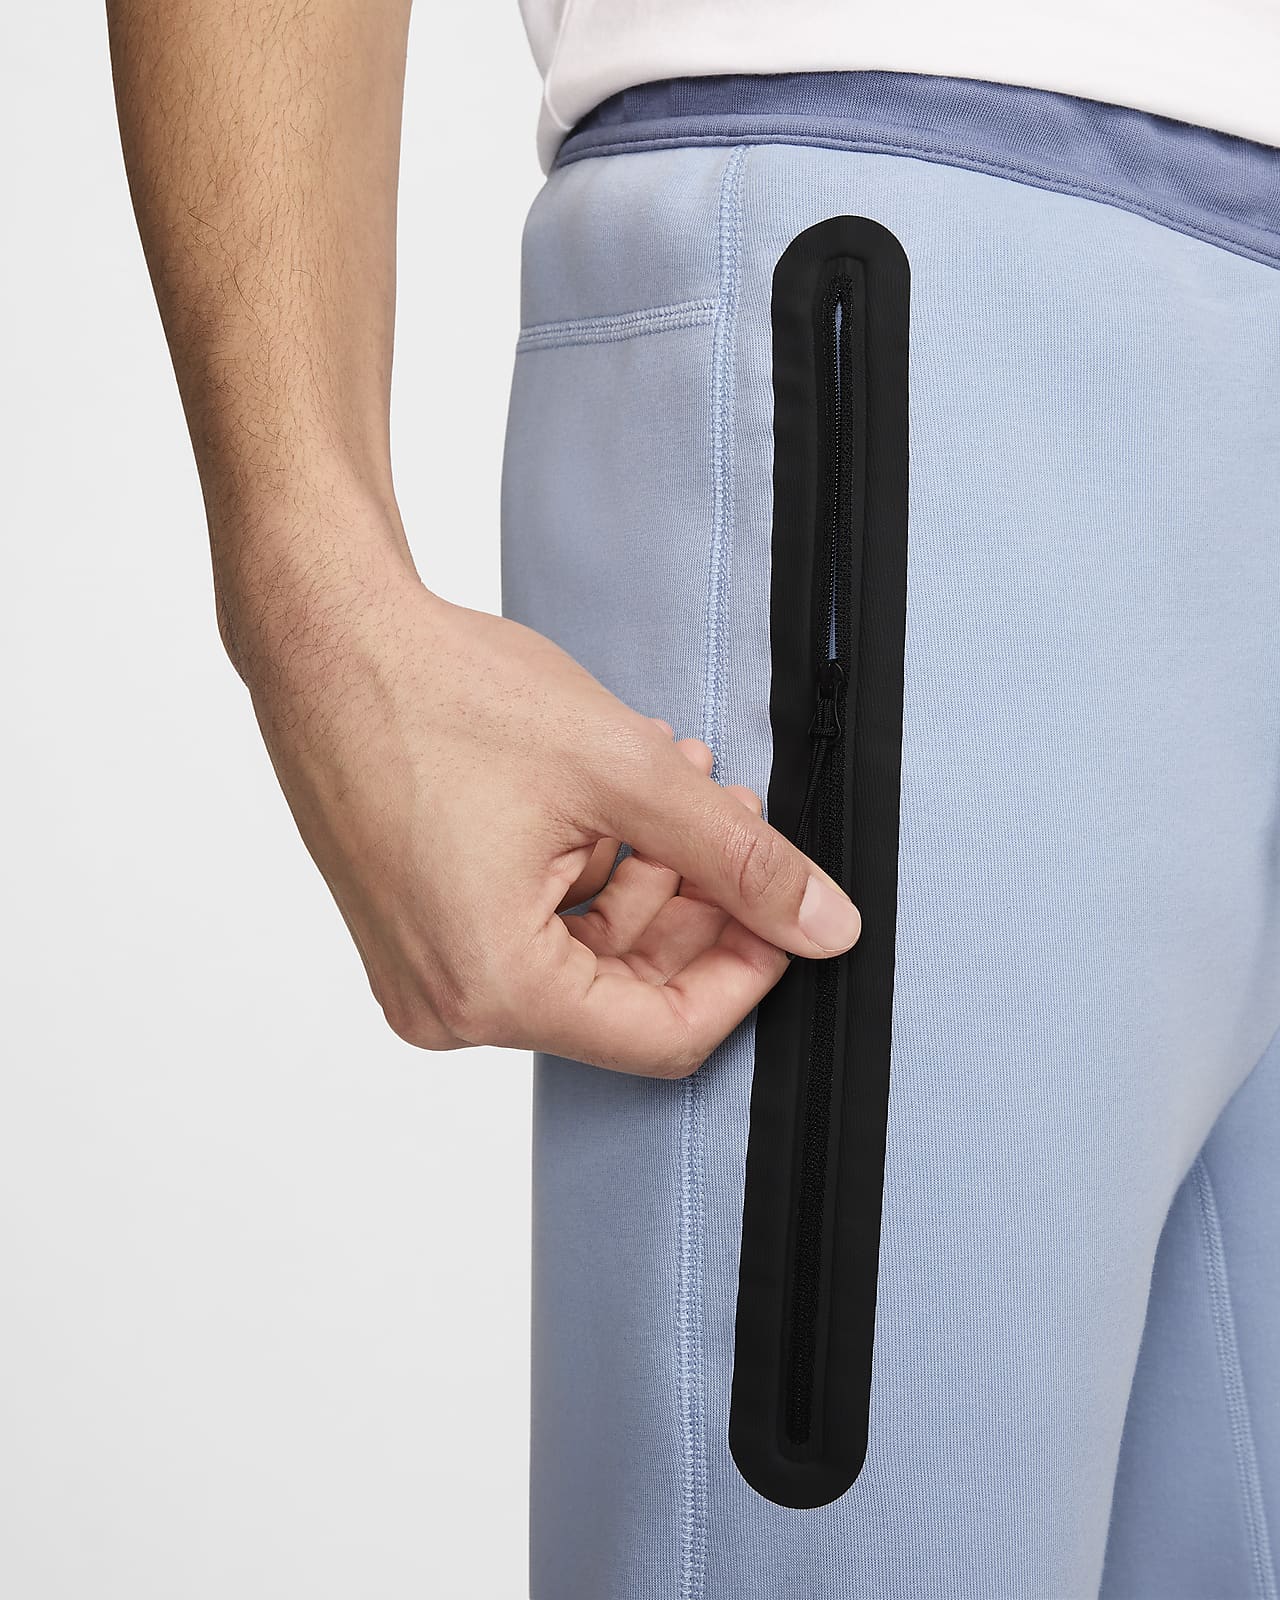 Nike engineered tech fleece straight leg joggers in black